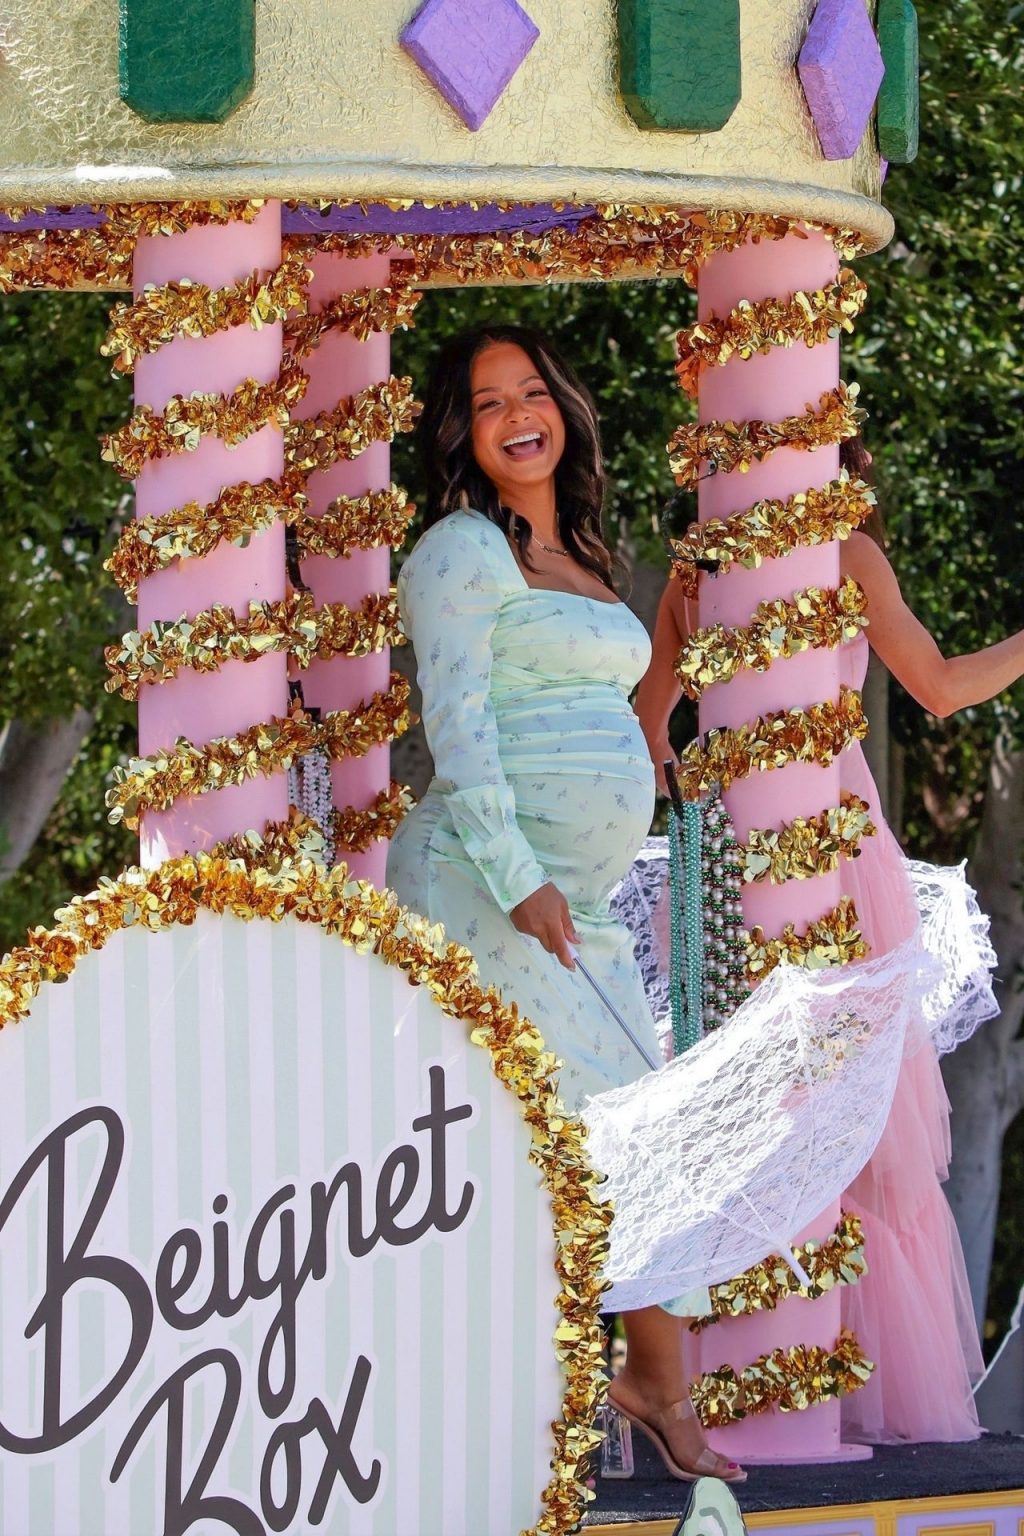 Pregnant Christina Milian Rides a Parade Float in Studio City (81 Photos)